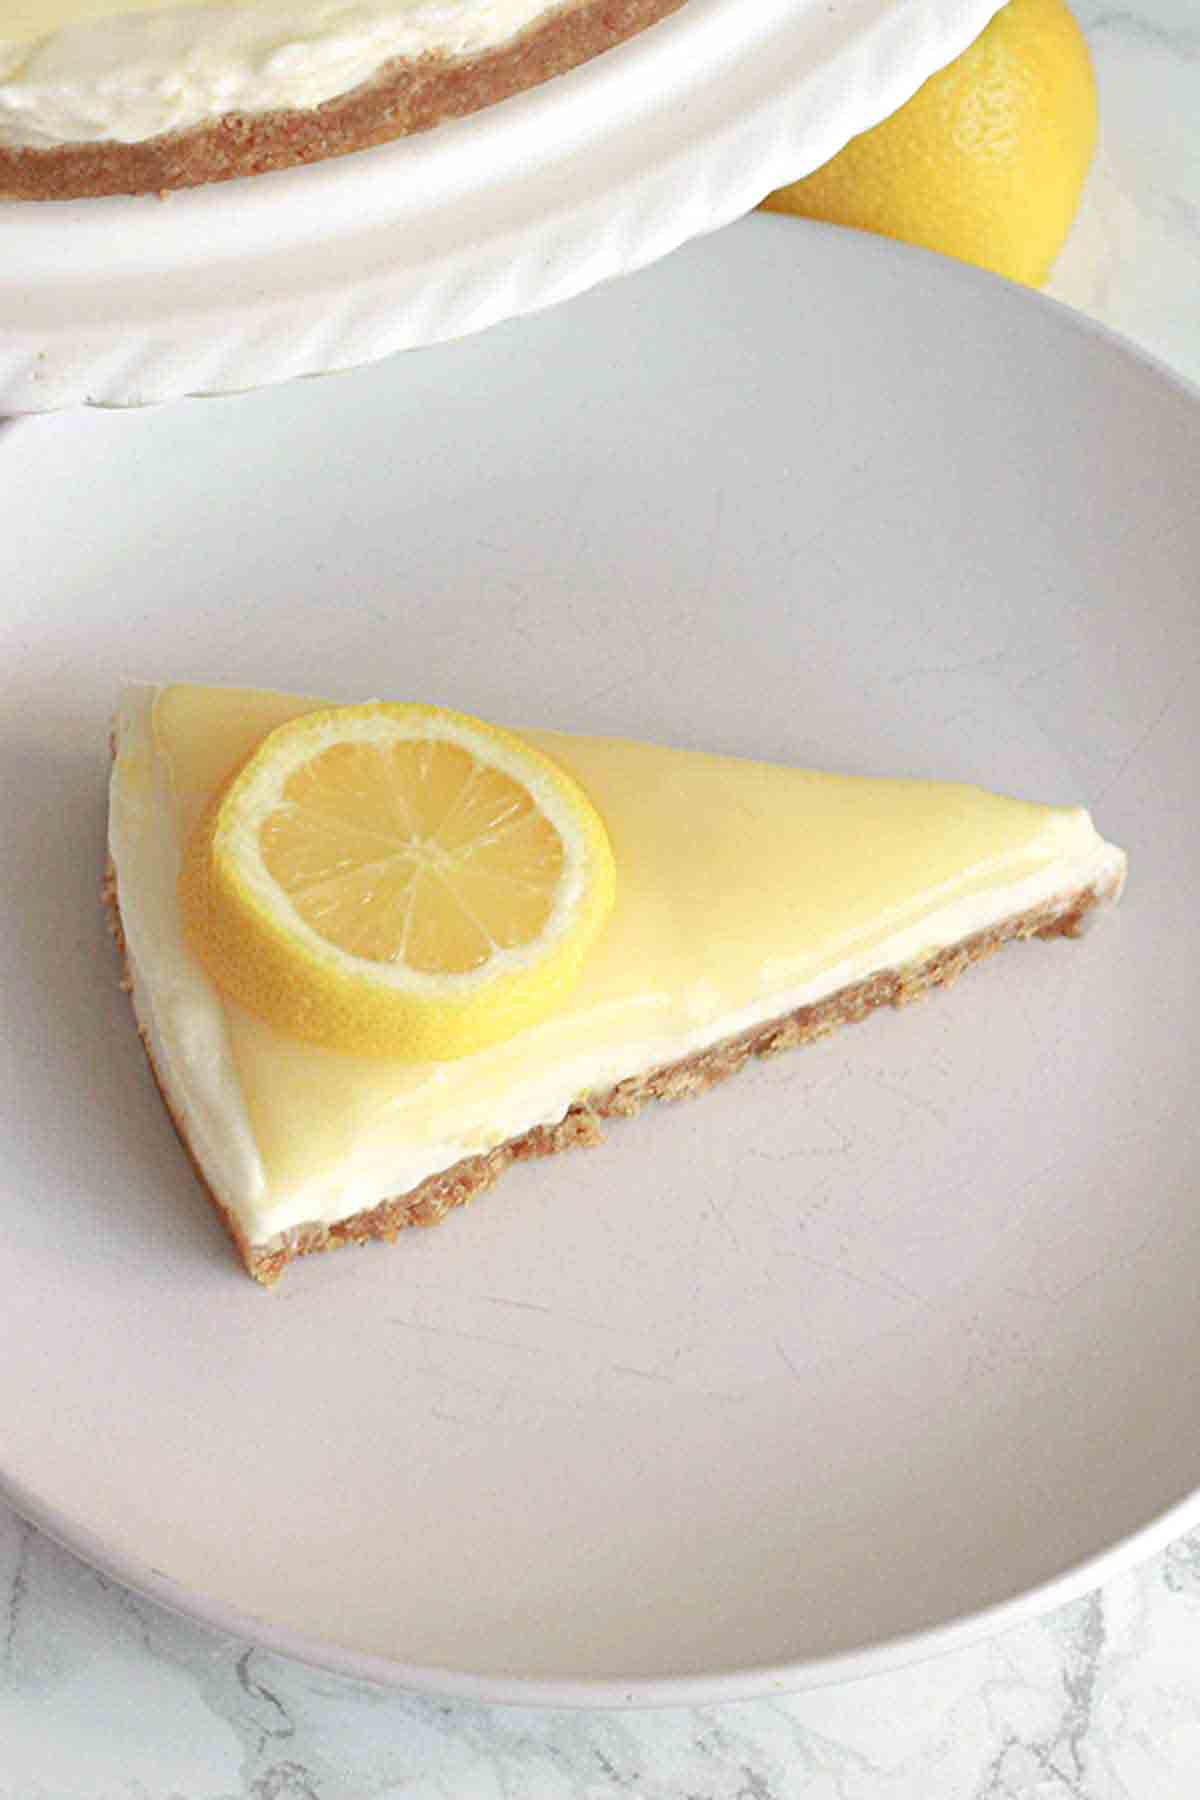 A Slice Of Vegan Lemon Cheesecake On A Plate